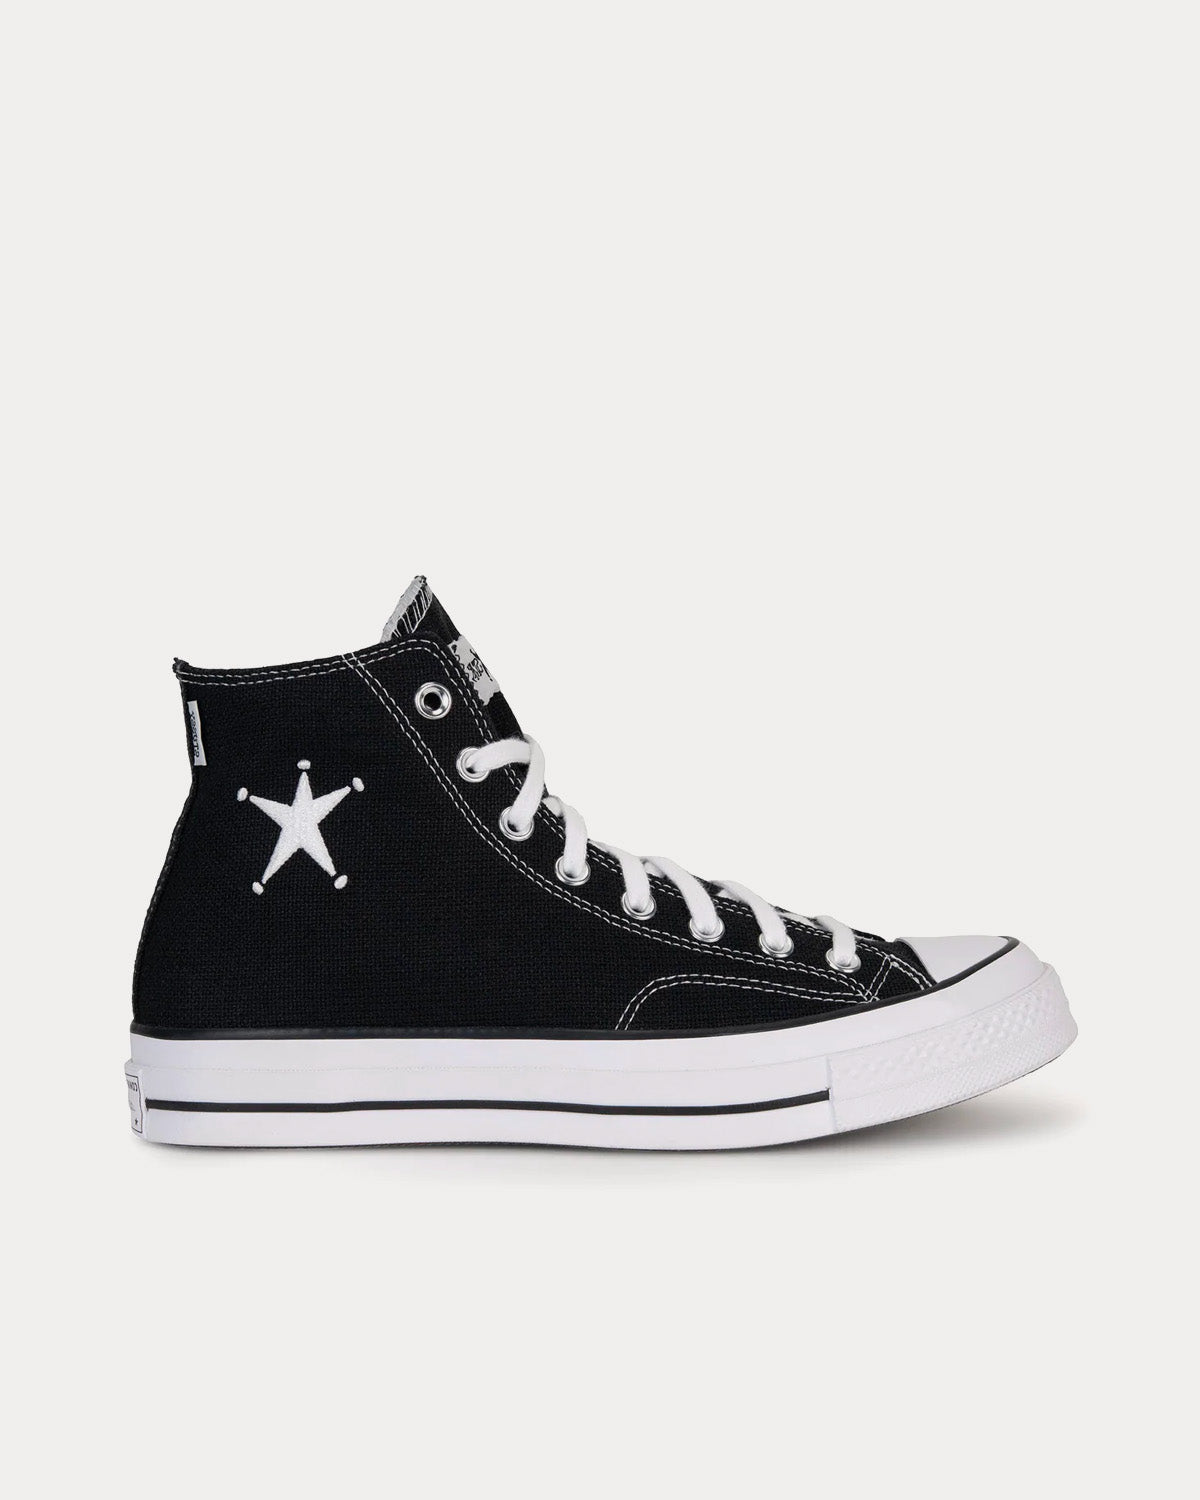 Converse x Stüssy Chuck 70 Black / White High Top Sneakers - Sneak ...